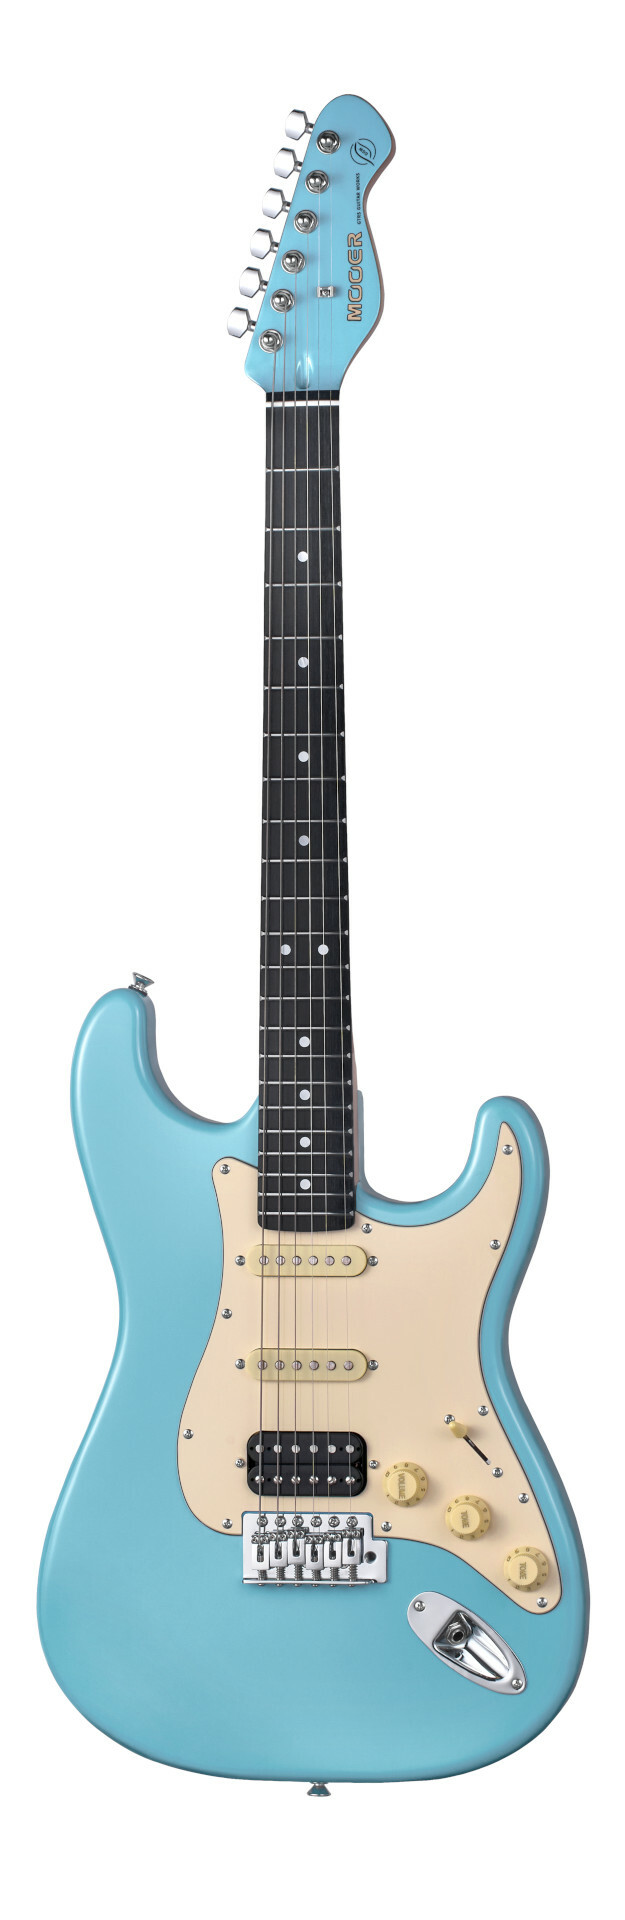 Mooer MSC10 Pro Guitar - Daphne Blue